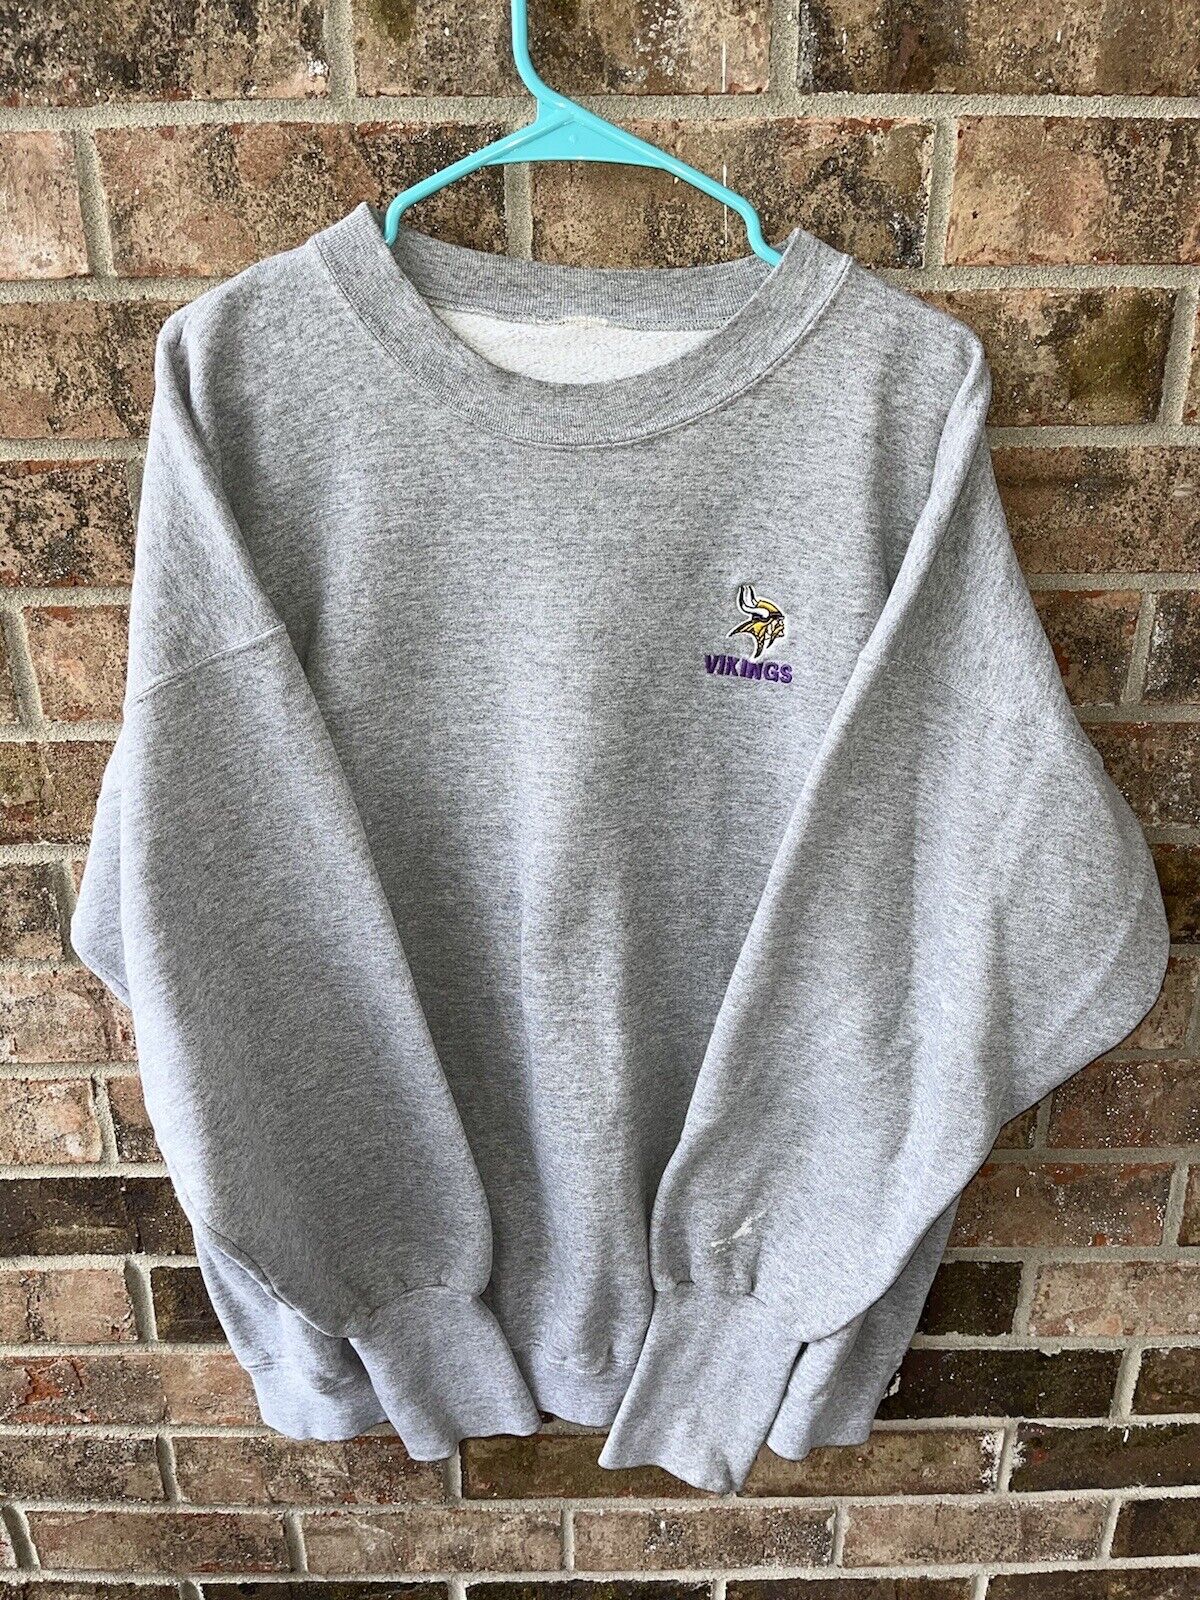 Vintage 90’s Minnesota Vikings Gray Crewneck Sweatshirt Sz XL